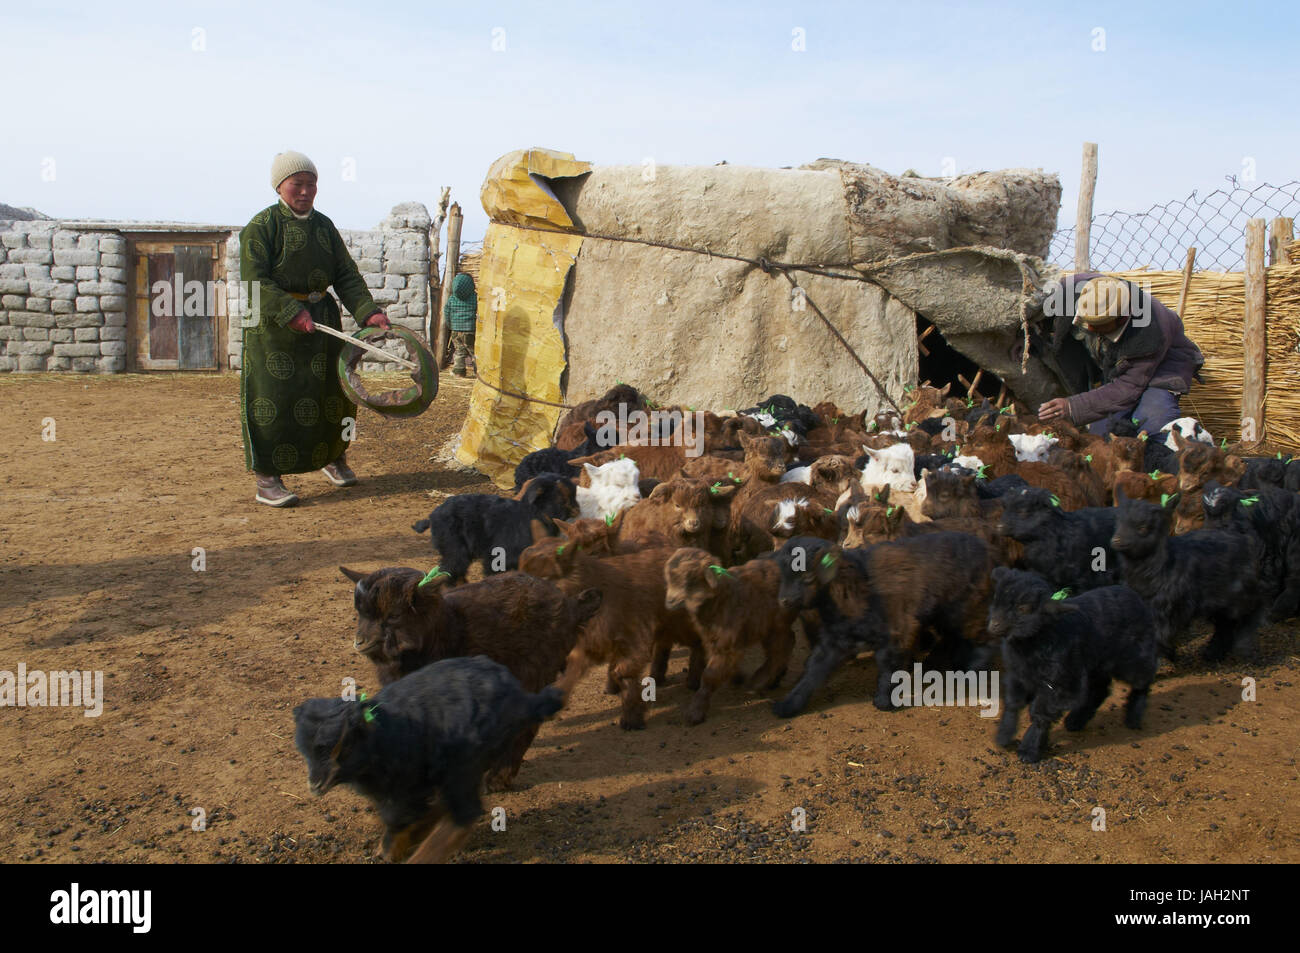 La Mongolie, steppe,province Khovd,hiver,vie nomade,support,chèvre,nomade se concentre, Banque D'Images